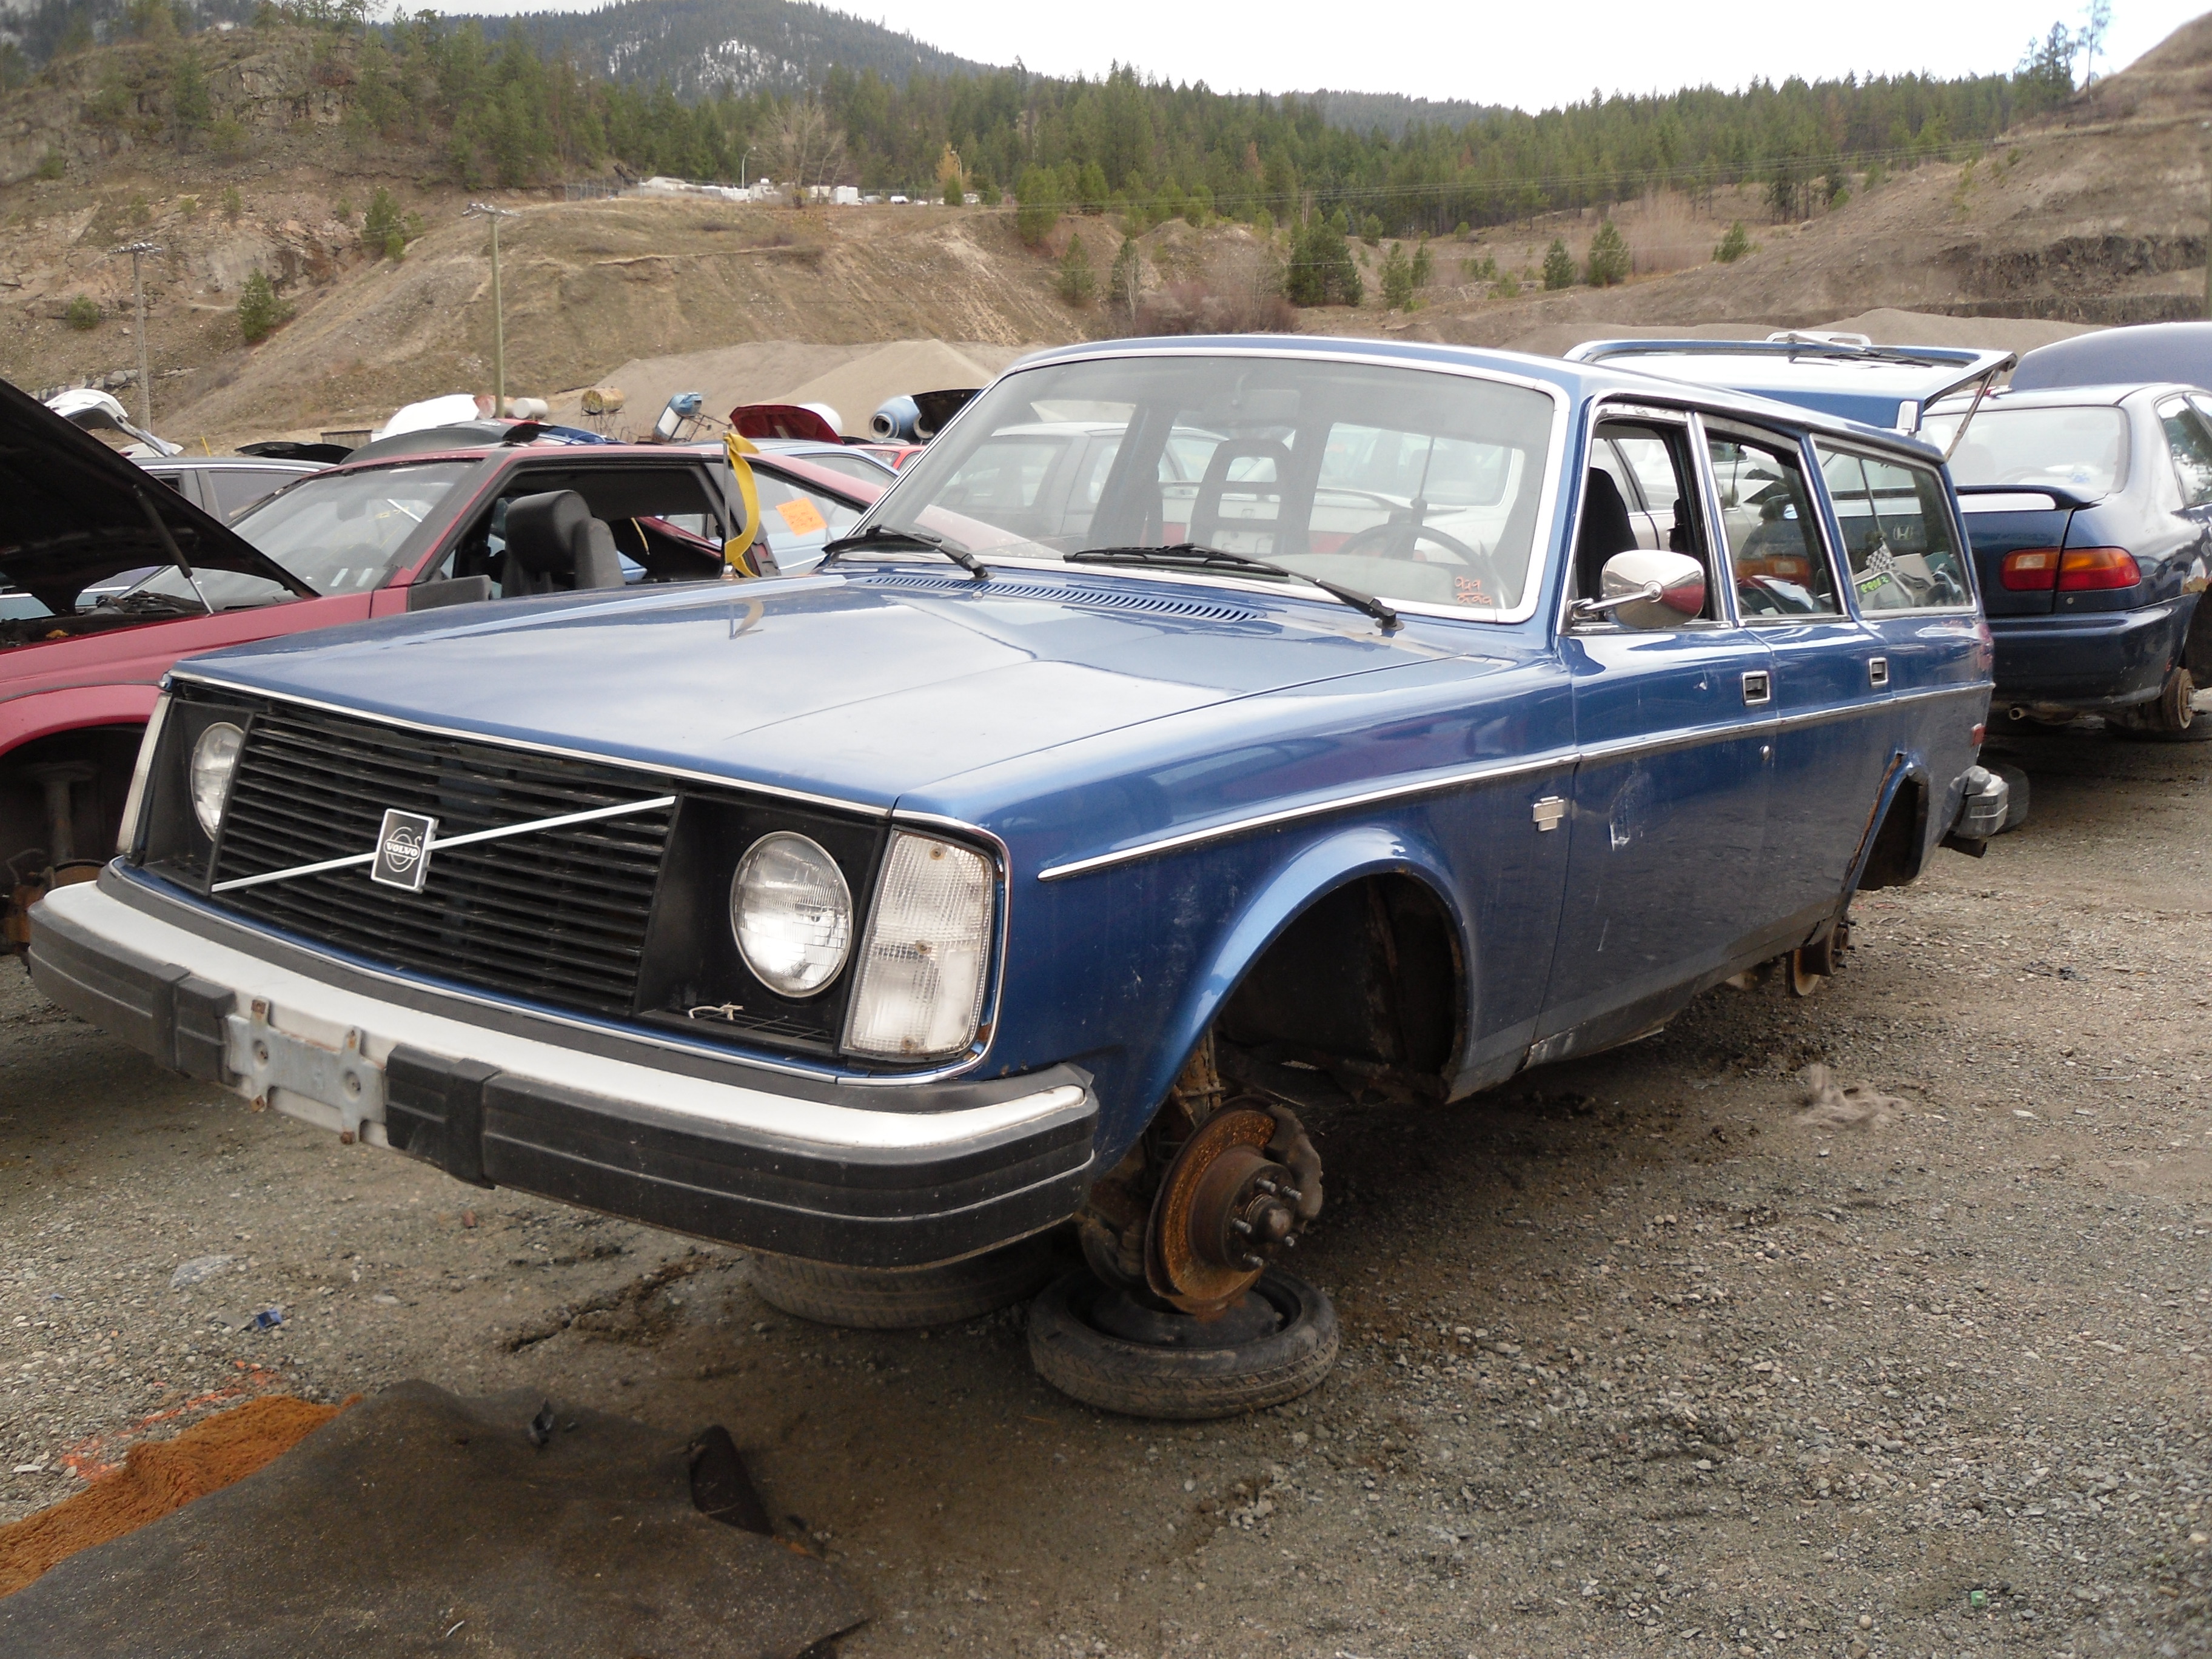 Volvo 240, 245 in BC junkyards 2012 | Flickr - Photo Sharing!